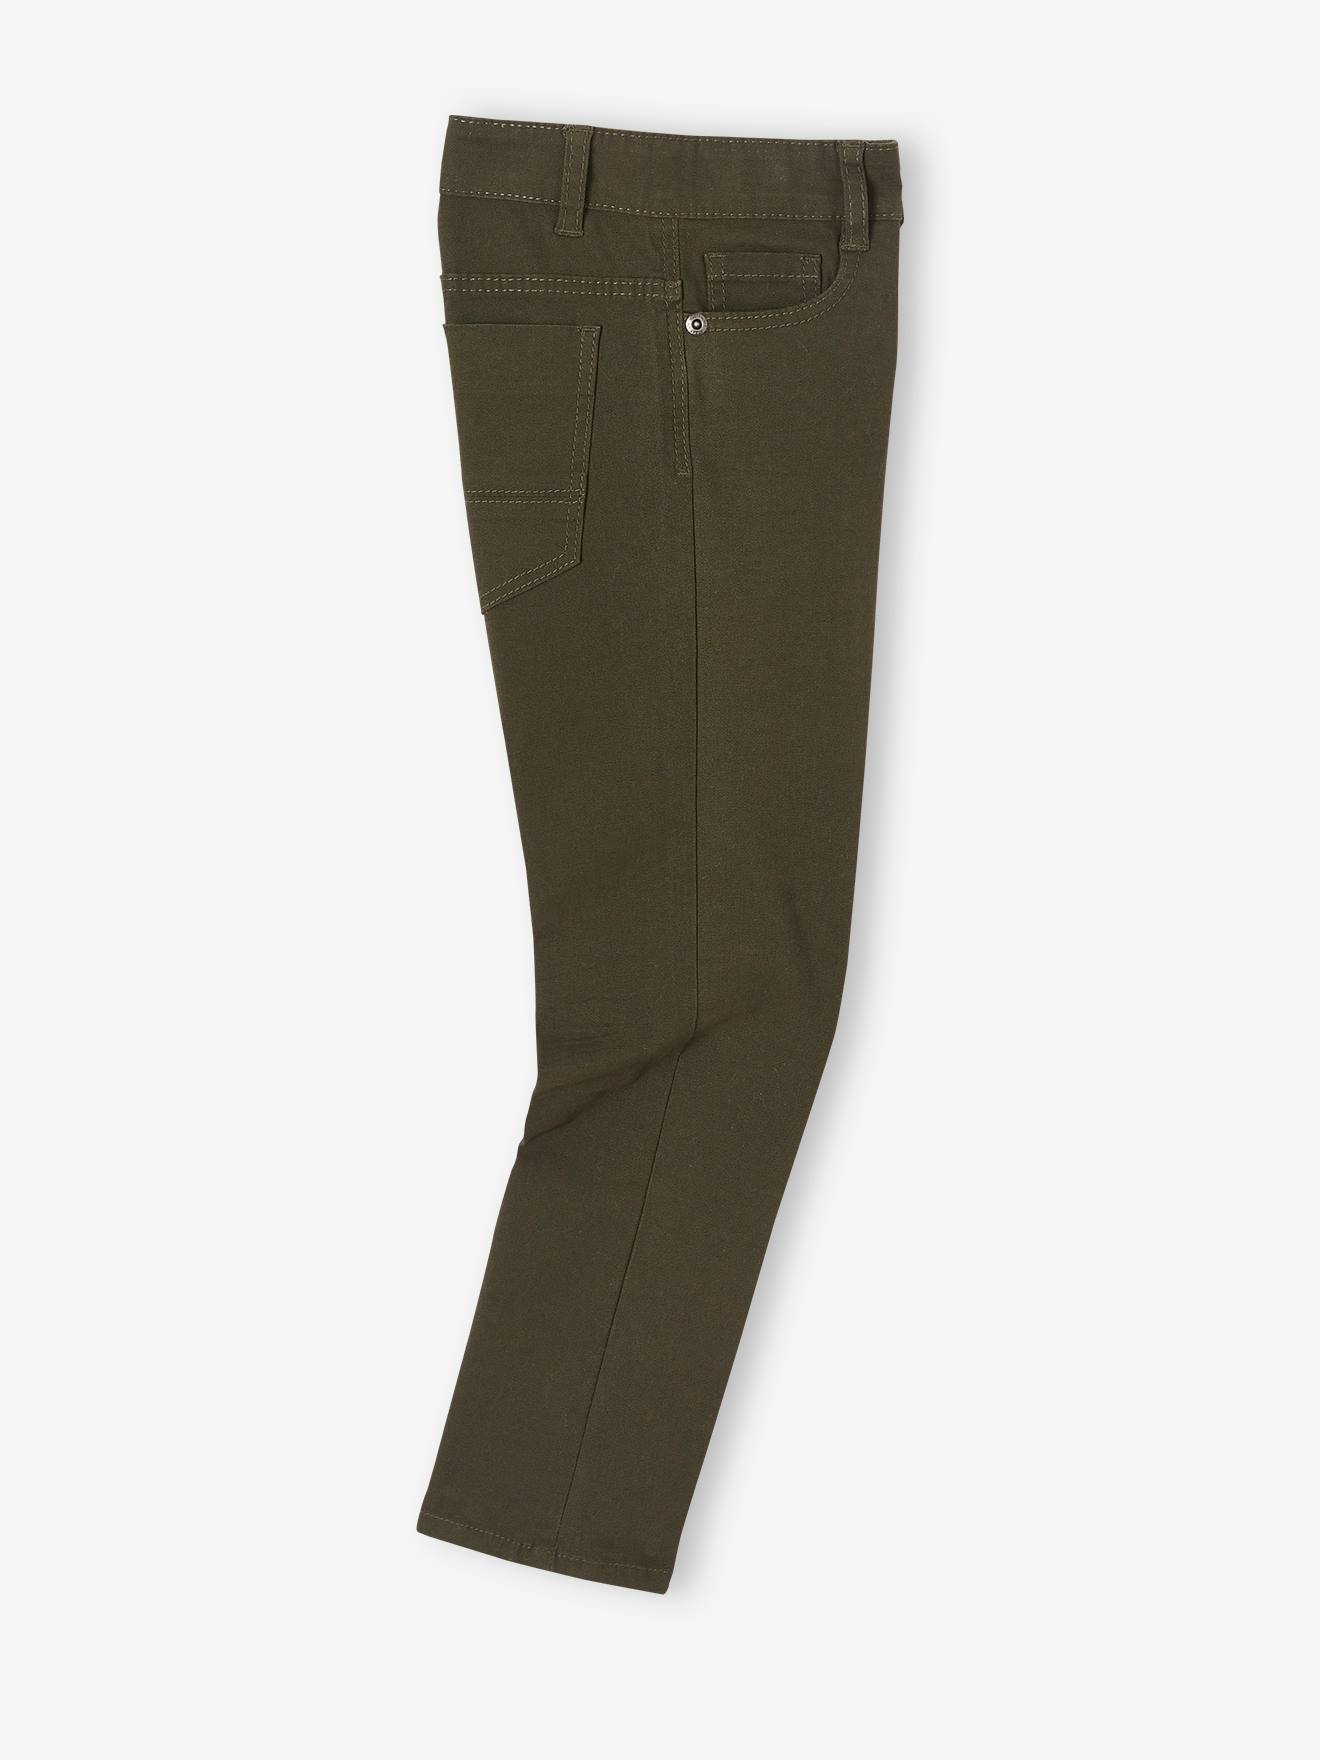 SKATE NATION Cargo Boys Trousers Green Slim Tapered W31 L33 | eBay